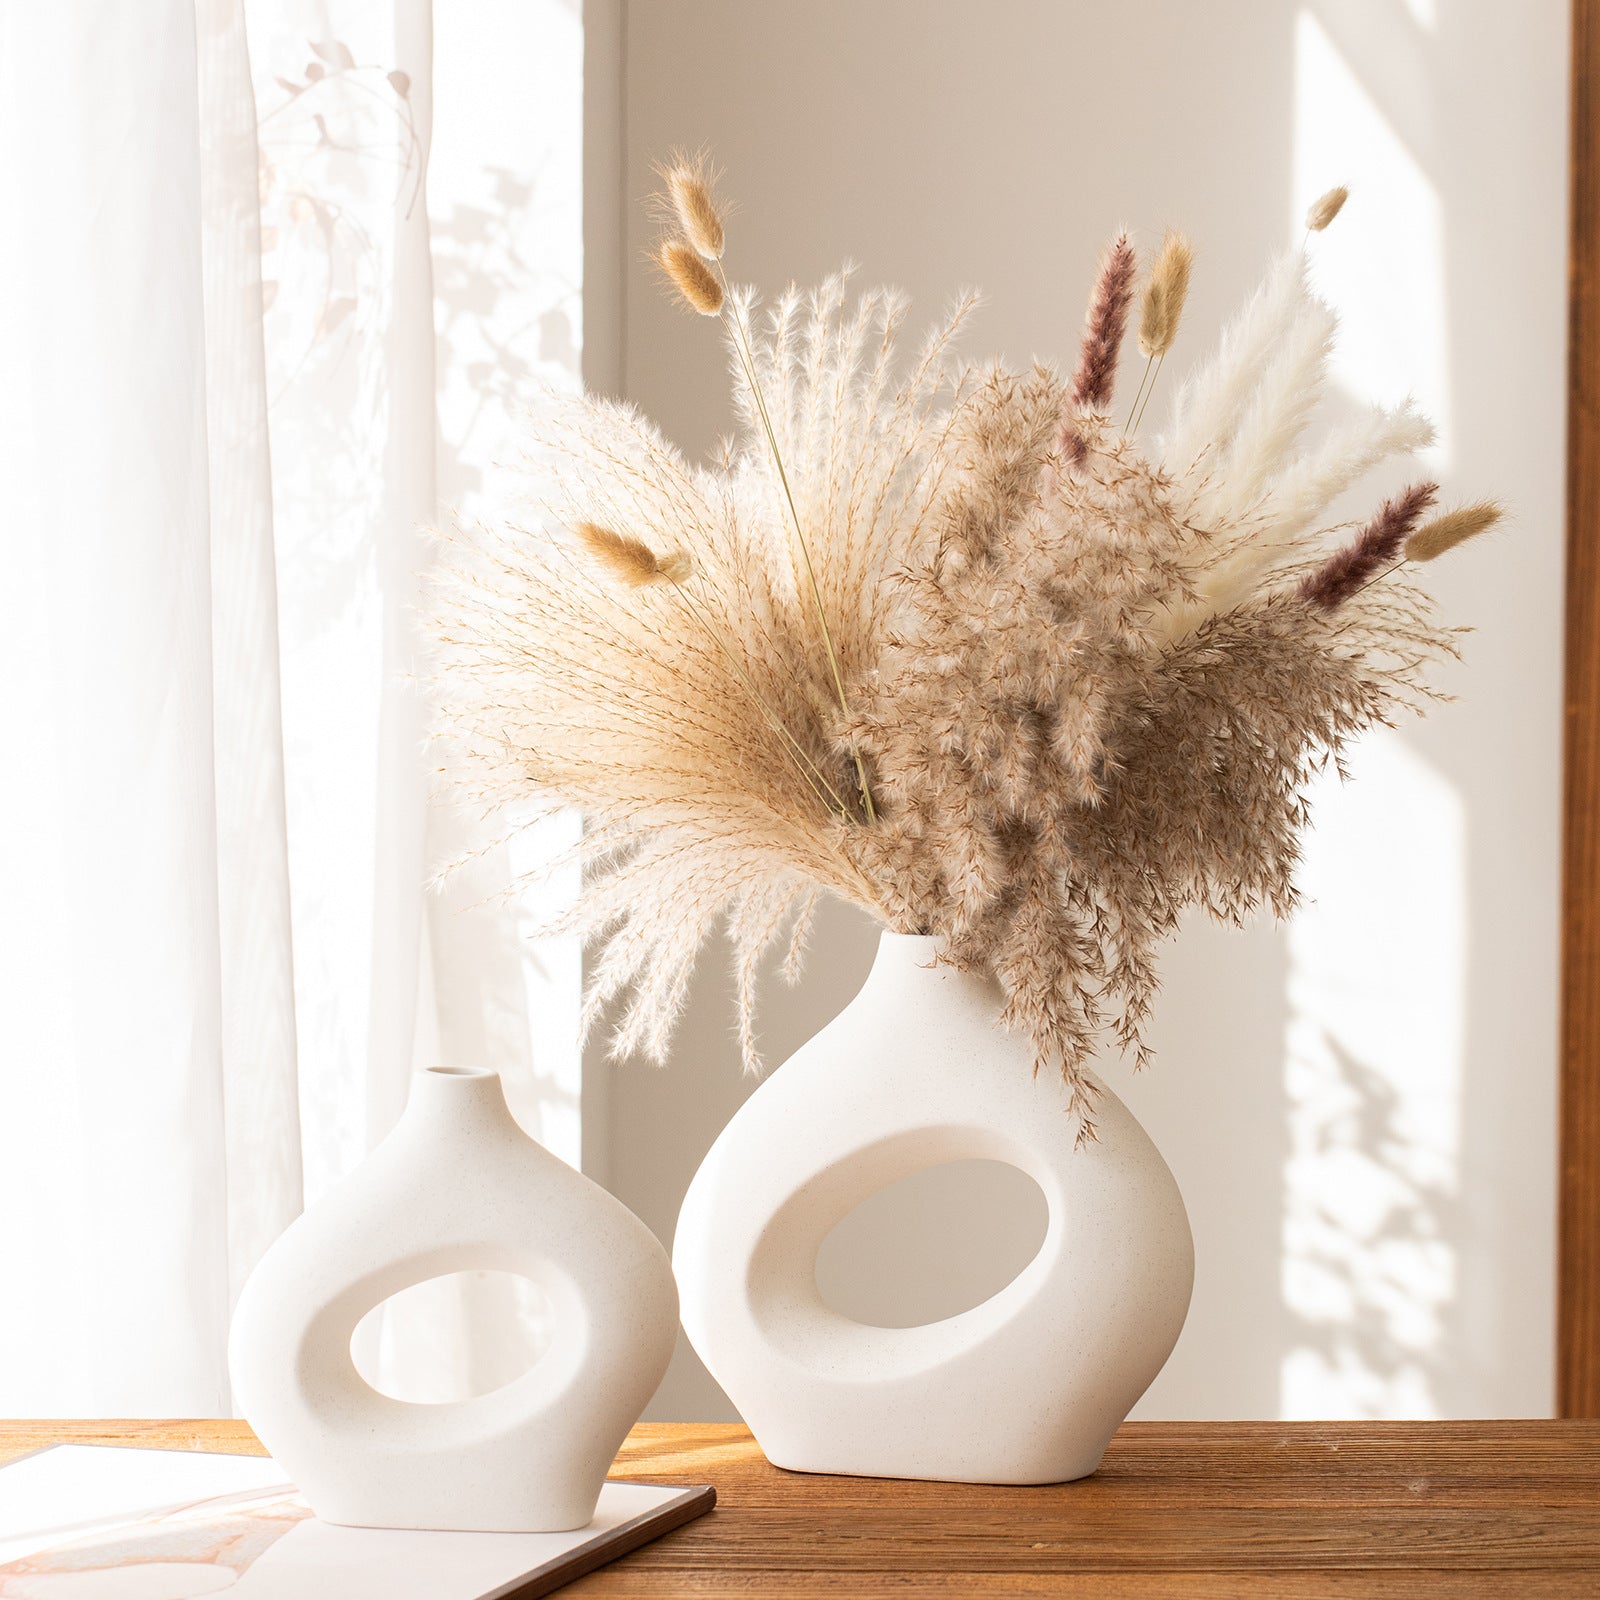 Ceramic vase - second generation round vase, decoration craft, soft vase